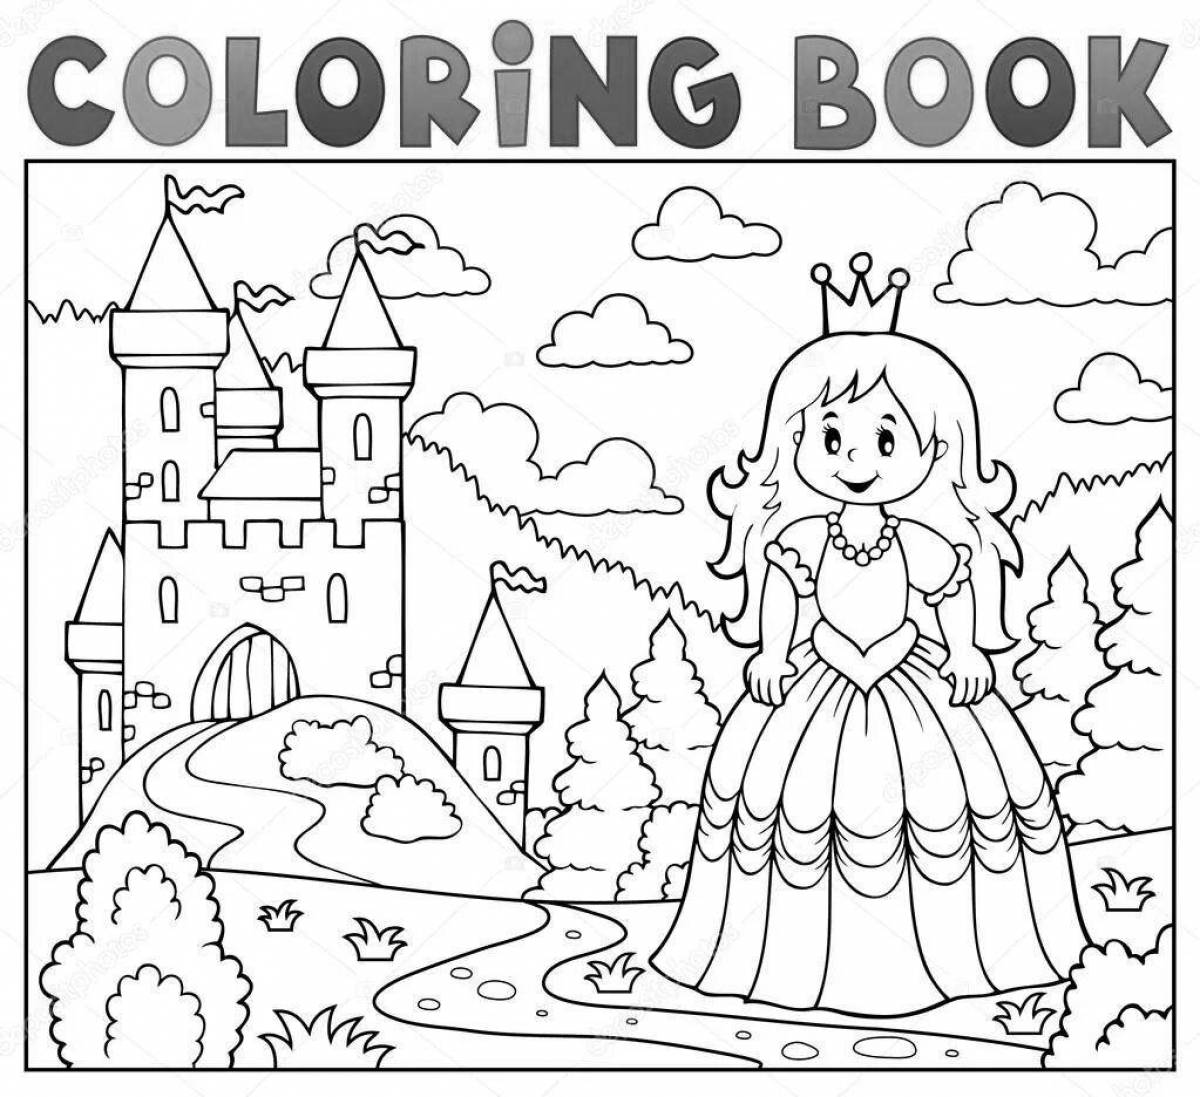 Violent princess castle coloring book for kids